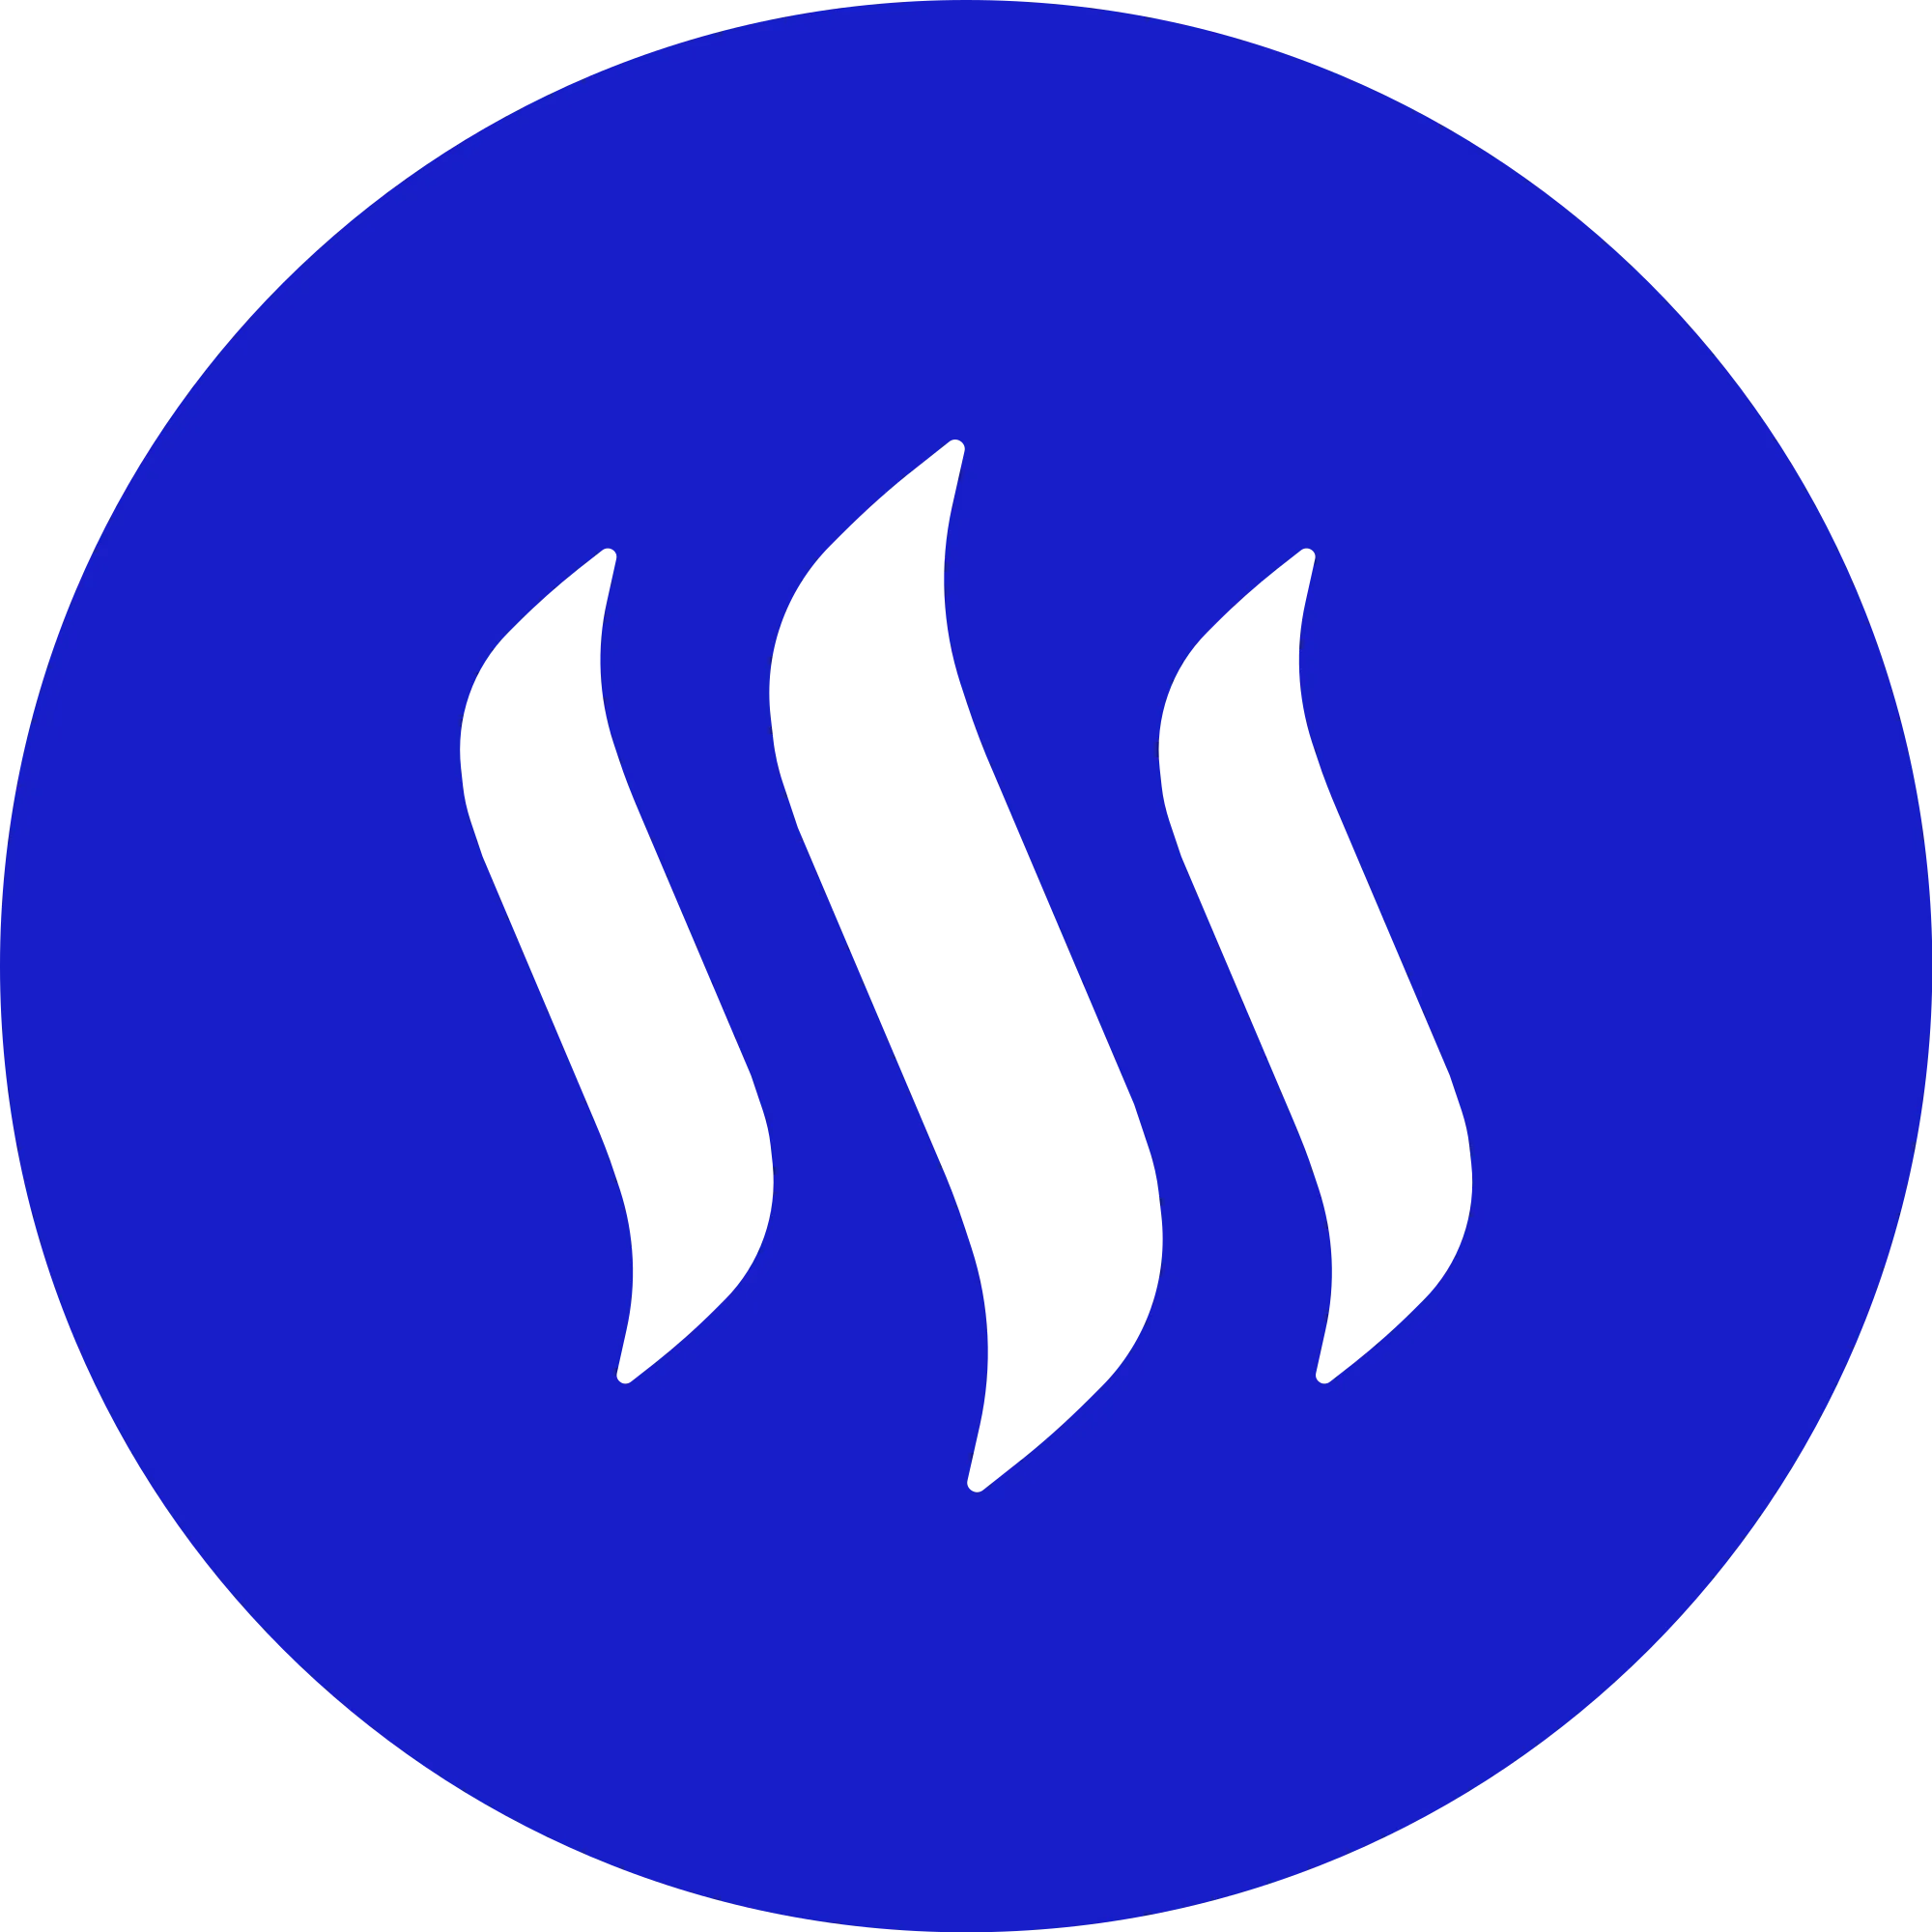 Steem logo in png format